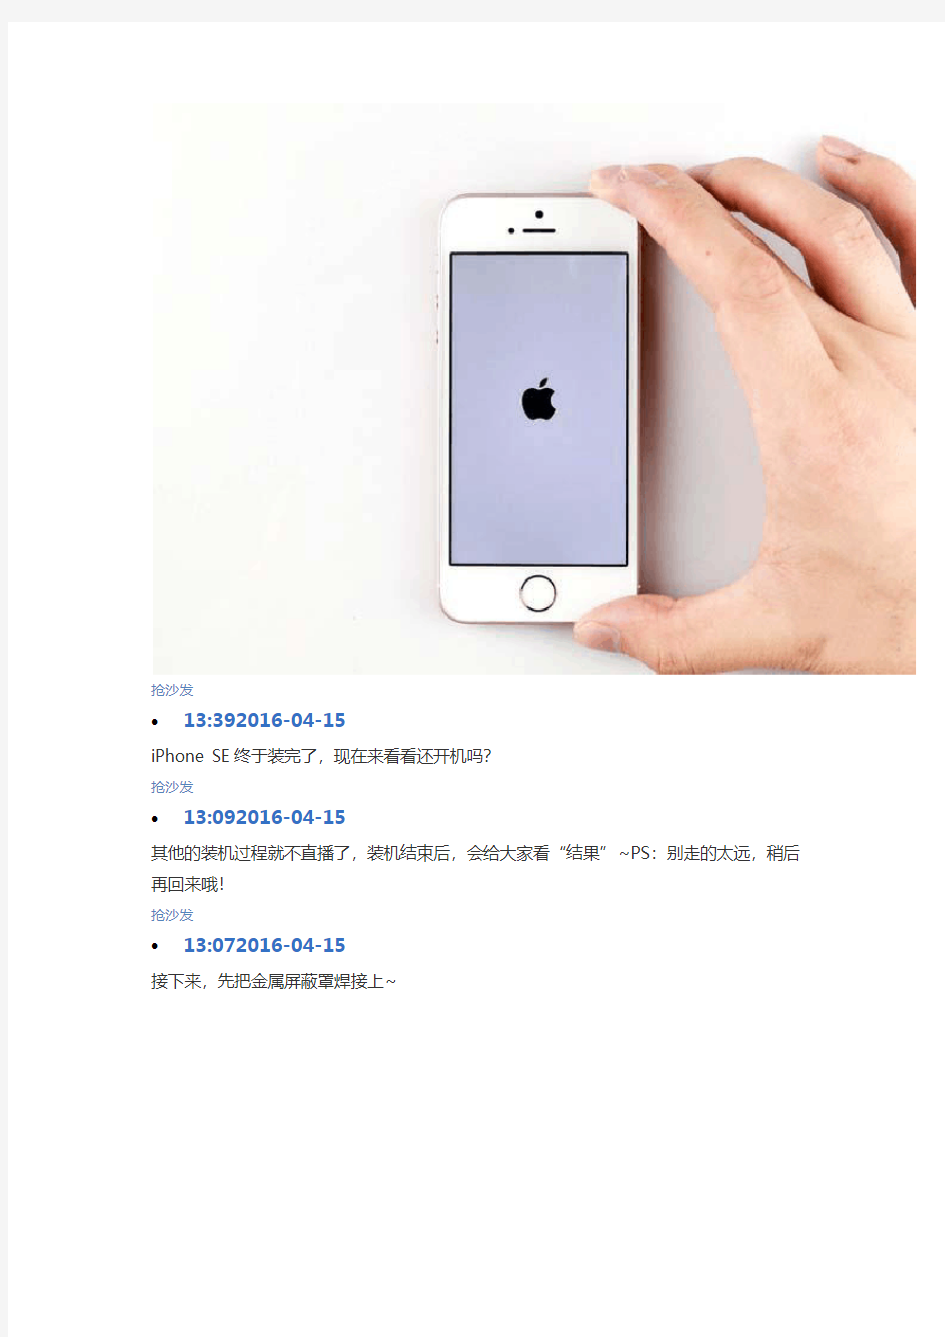 iphone5se维修培训教程及原因说明拆机细节说明.docx